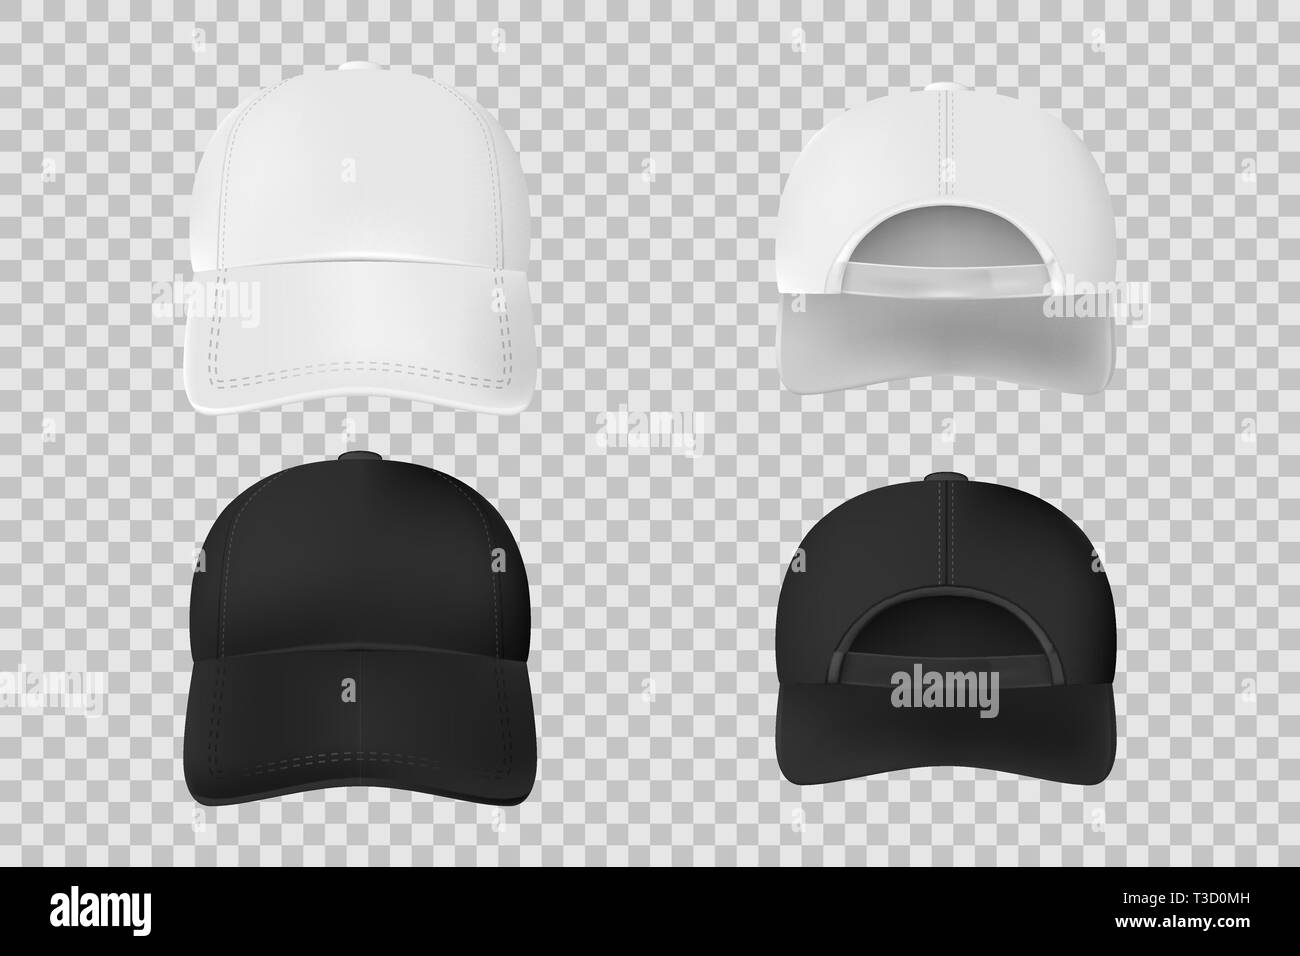 Plantilla de gorra de béisbol fotografías e imágenes de alta resolución -  Alamy